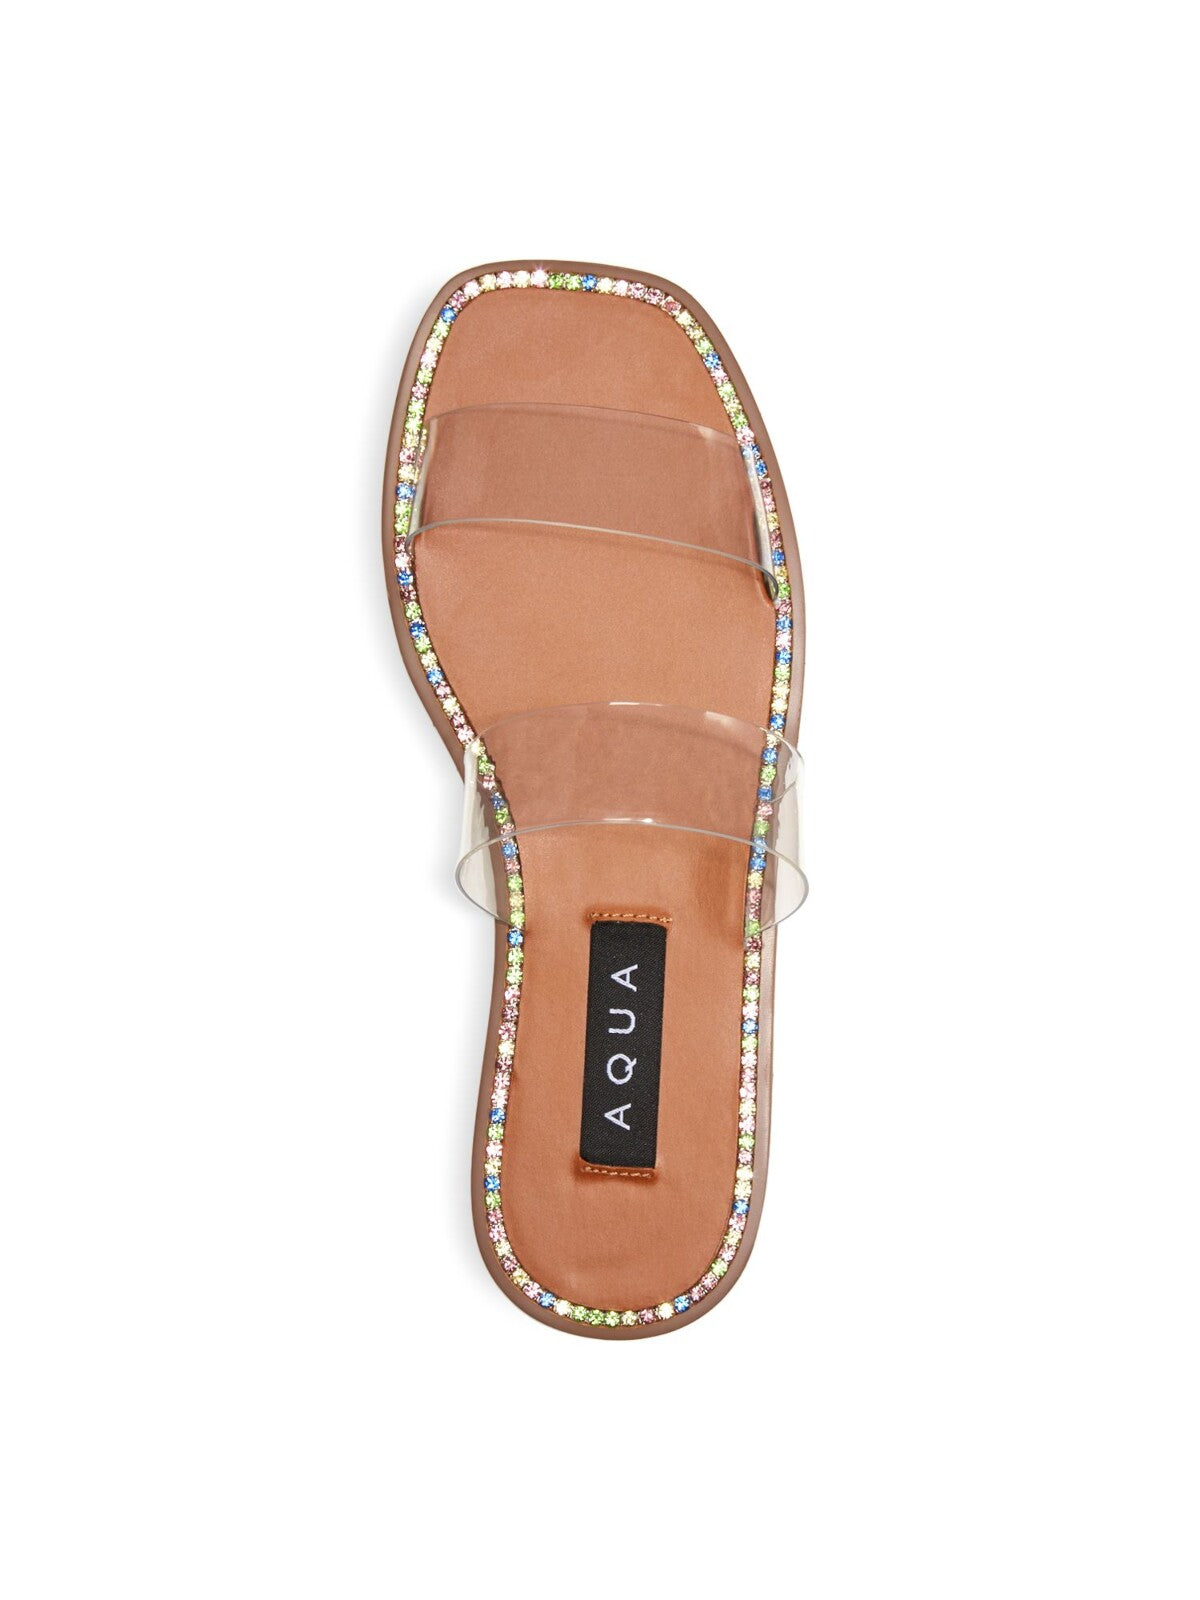 AQUA Womens Clear Studded Rhinestone Glow Square Toe Slip On Slide Sandals Shoes 6 M